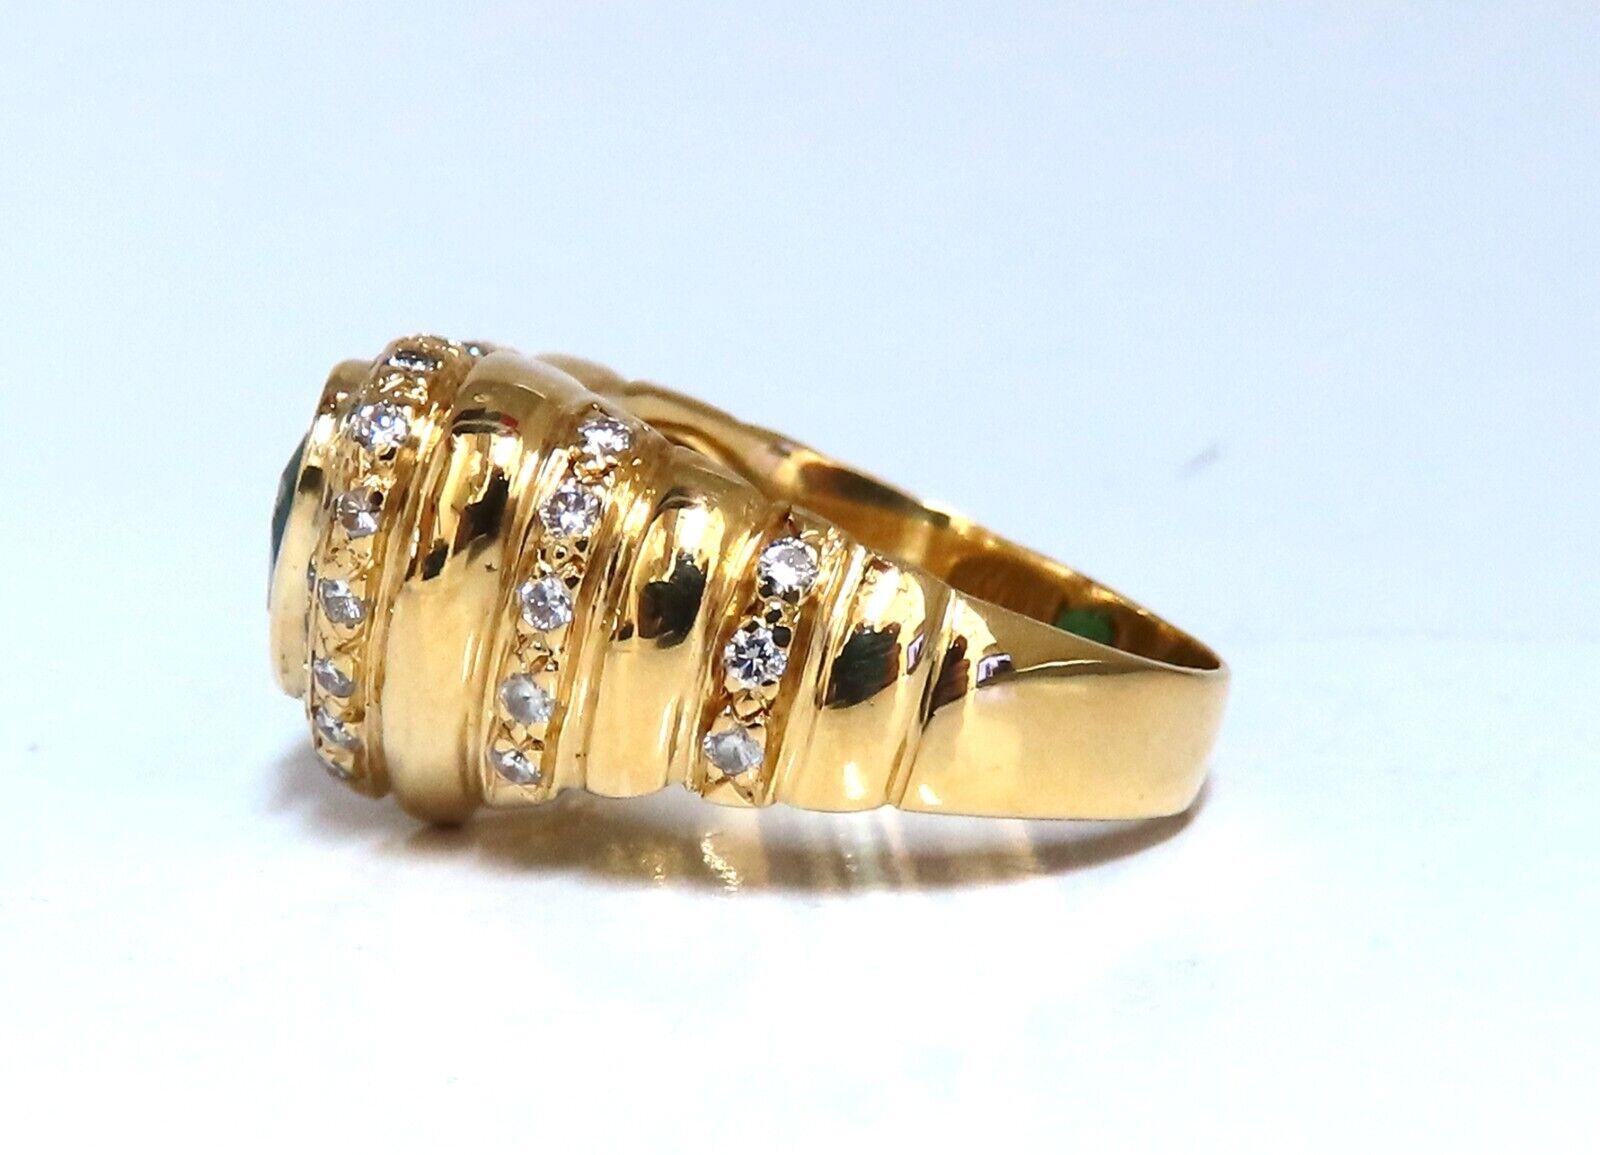 GIA Certified Natural Emerald diamonds ring.

1.21ct natural emerald

GIA Report #: 6214697664

 Transparent, Green

Classic Heart cut, brilliant cut

7.38 x 8.49 x 4.05mm

Quality: 